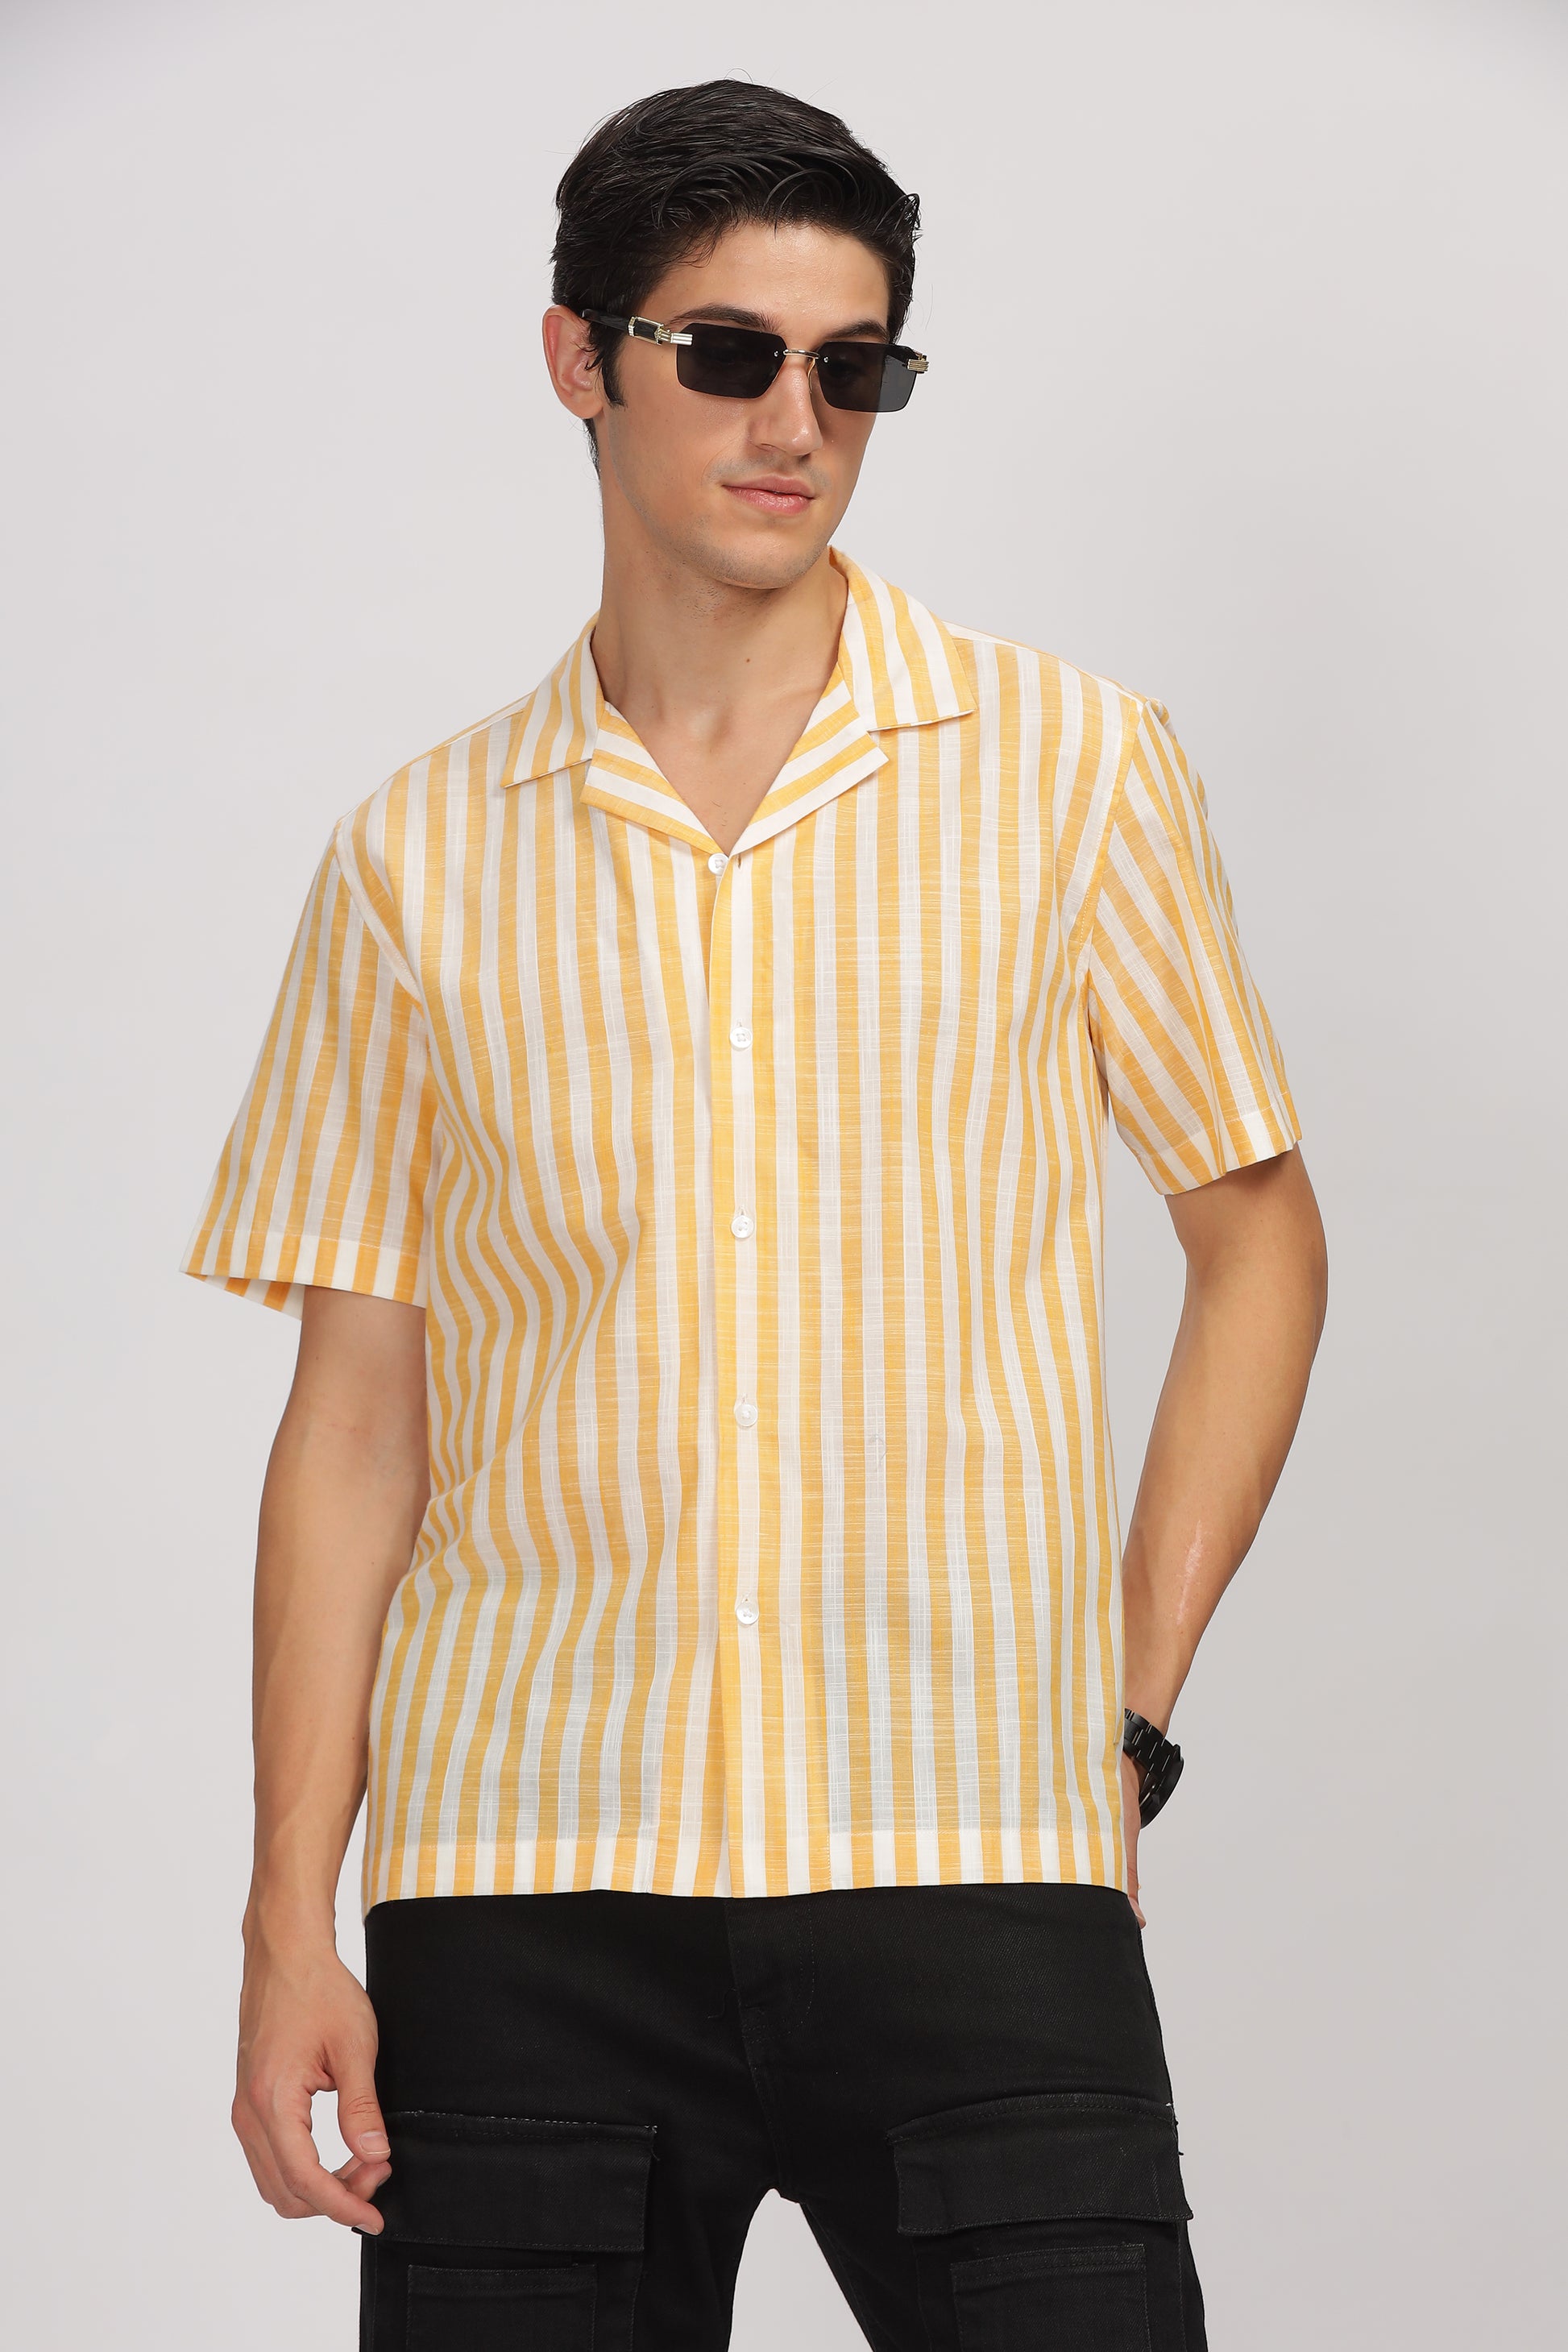 Uri Yellow Striped Cuban Collar Shirt - Kashyap Global Lifestyles LLP